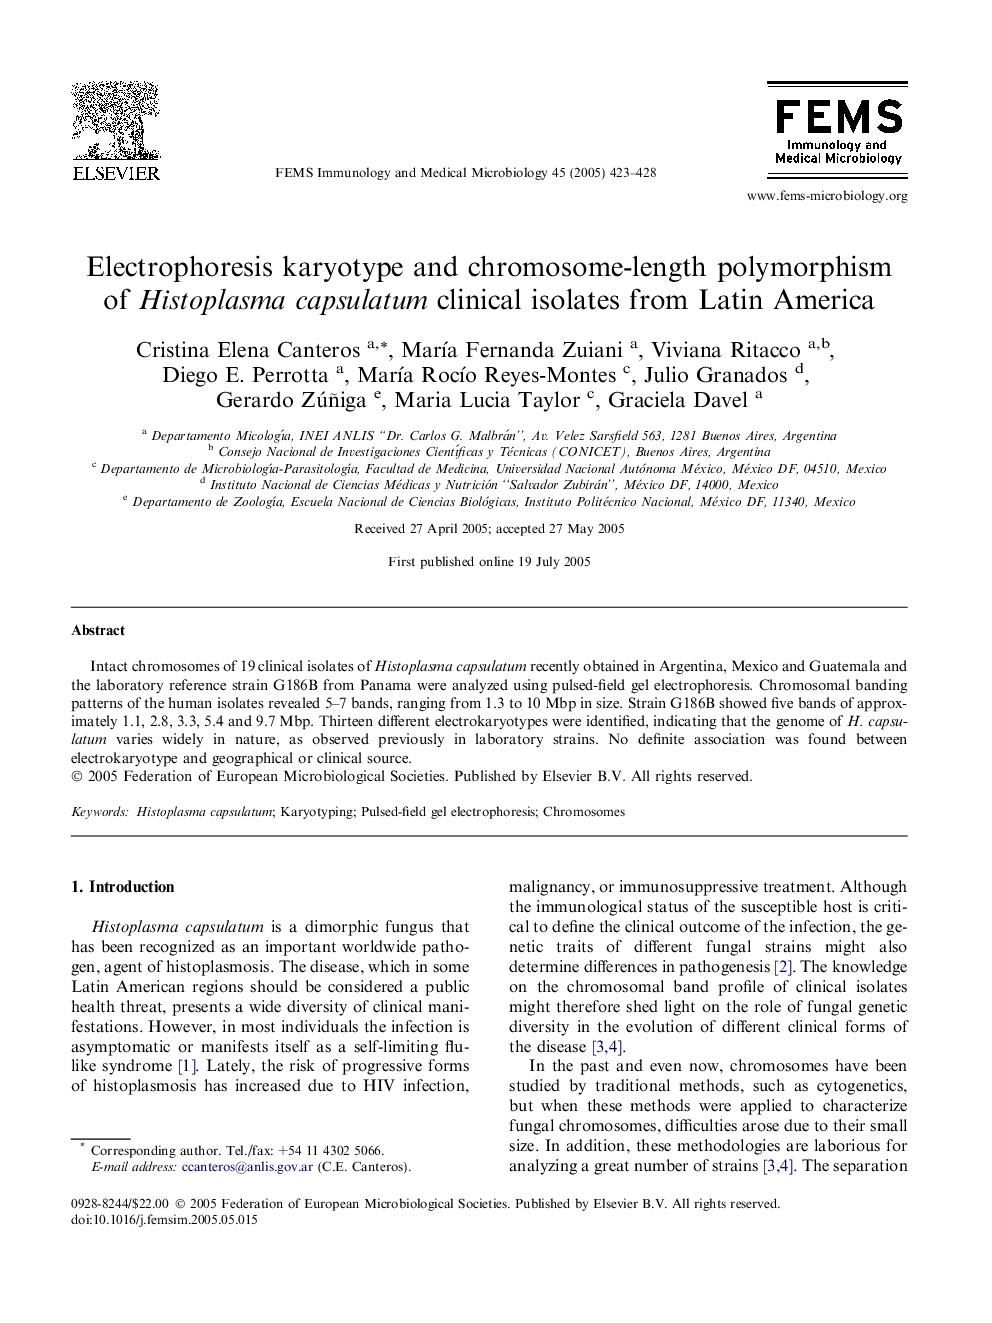 Electrophoresis karyotype and chromosome-length polymorphism of Histoplasma capsulatum clinical isolates from Latin America